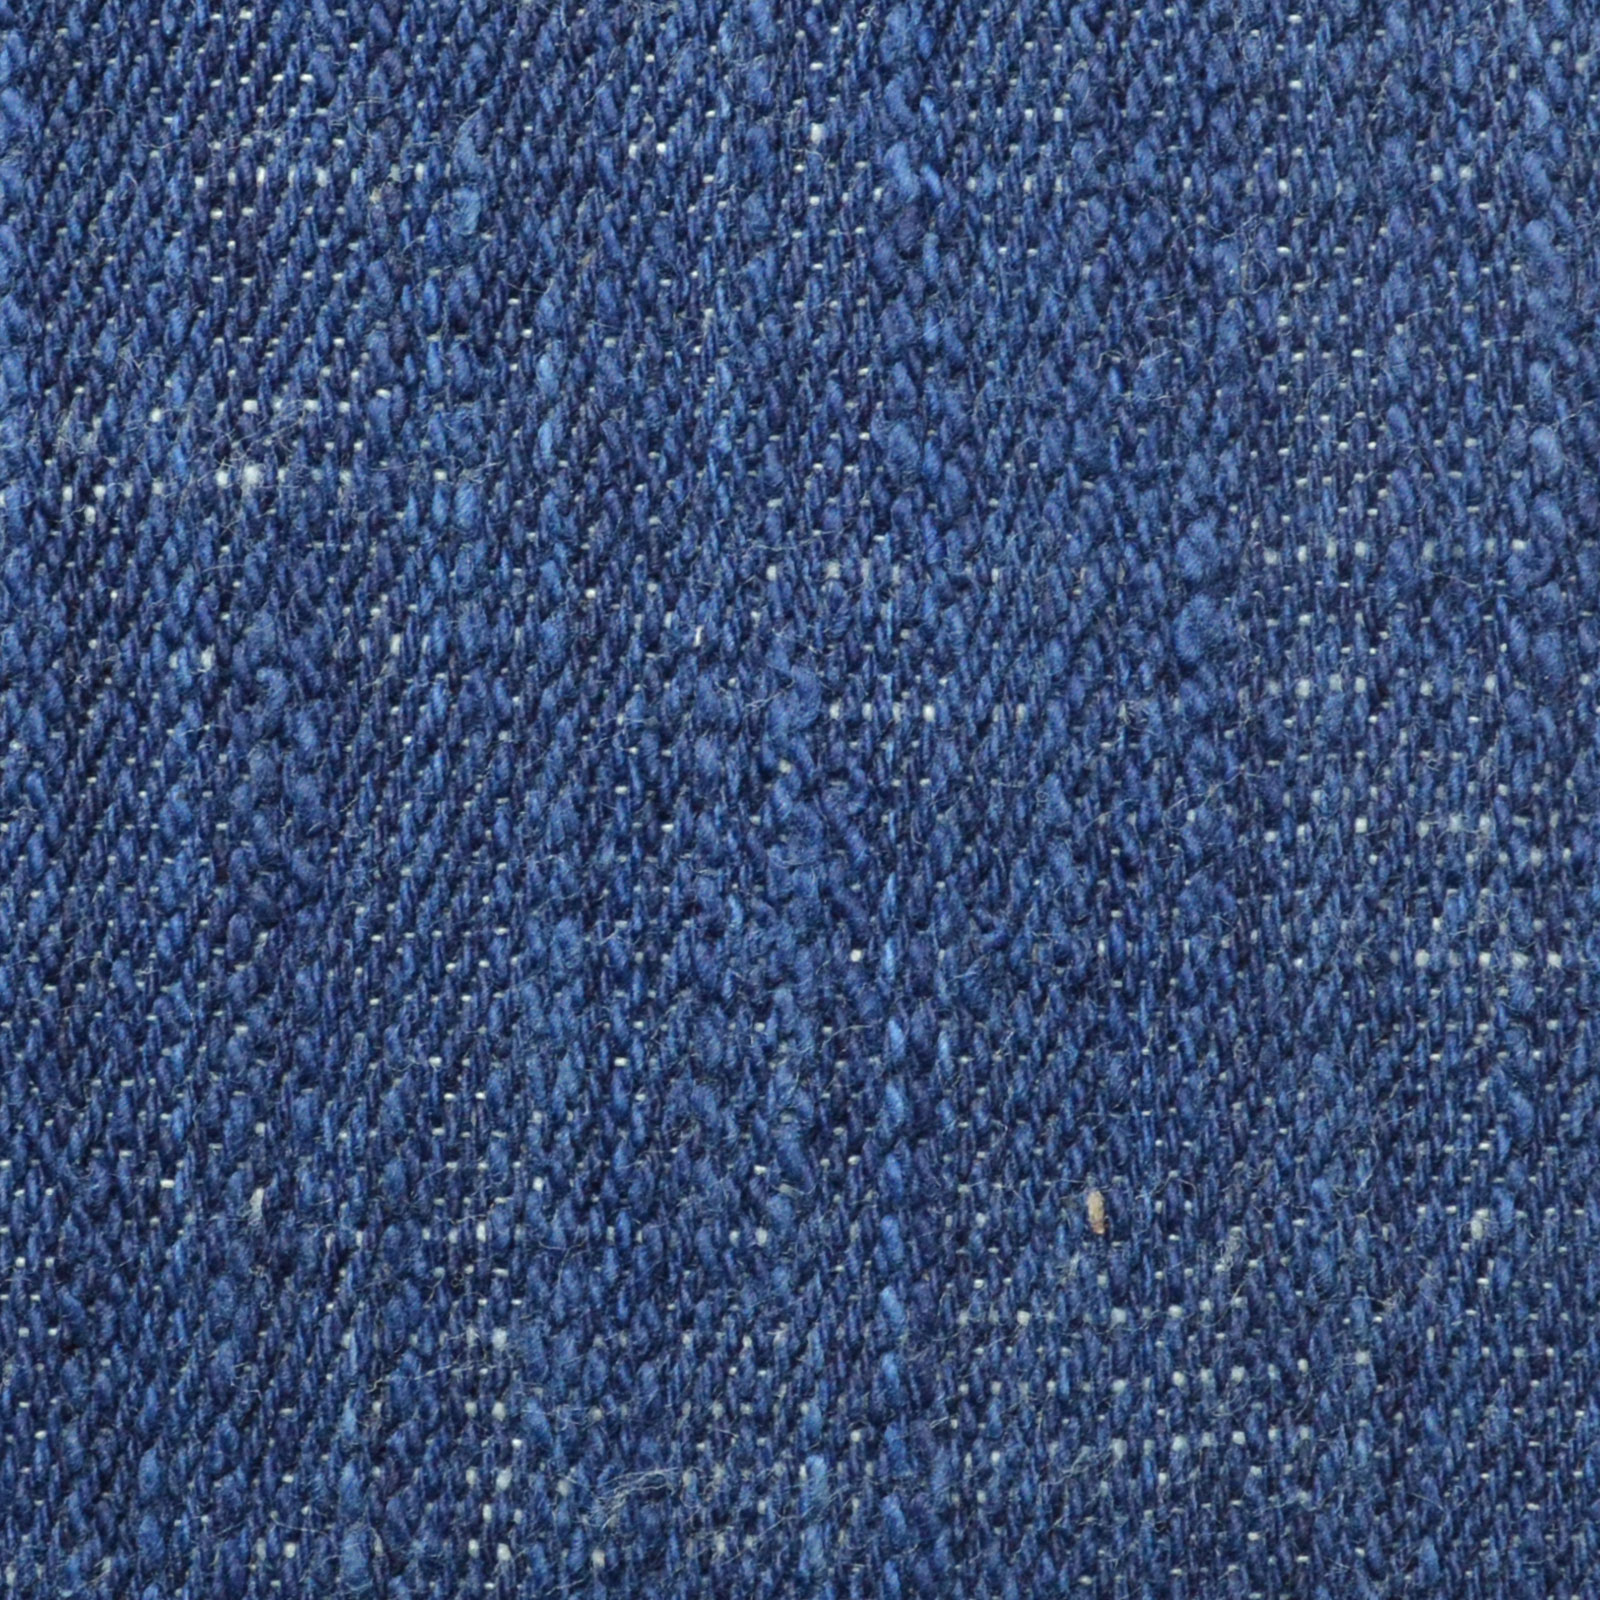 Blue Indigo Cotton Denim Fabric, For Jeans at Rs 230/meter in Surat